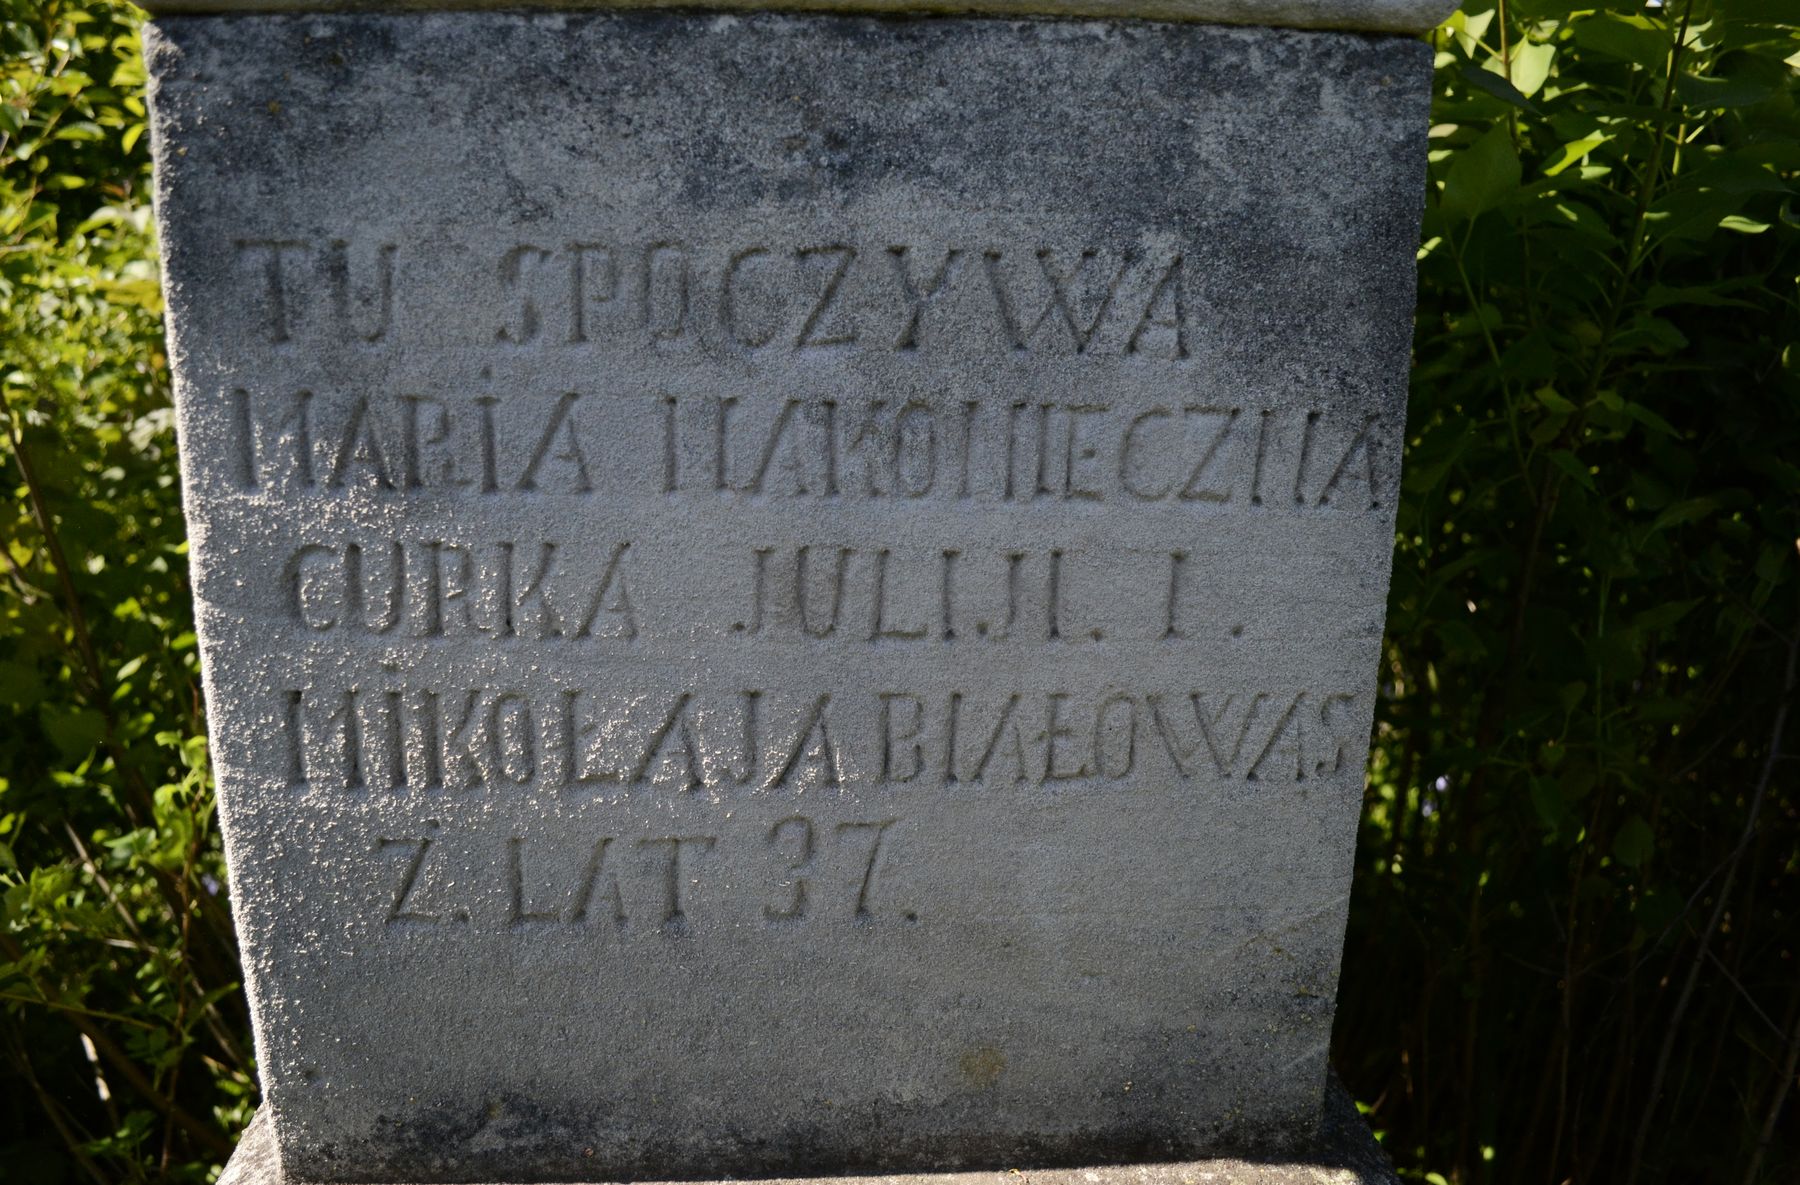 Inscription from the gravestone of Maria Nakonieczna, Ihrownica cemetery